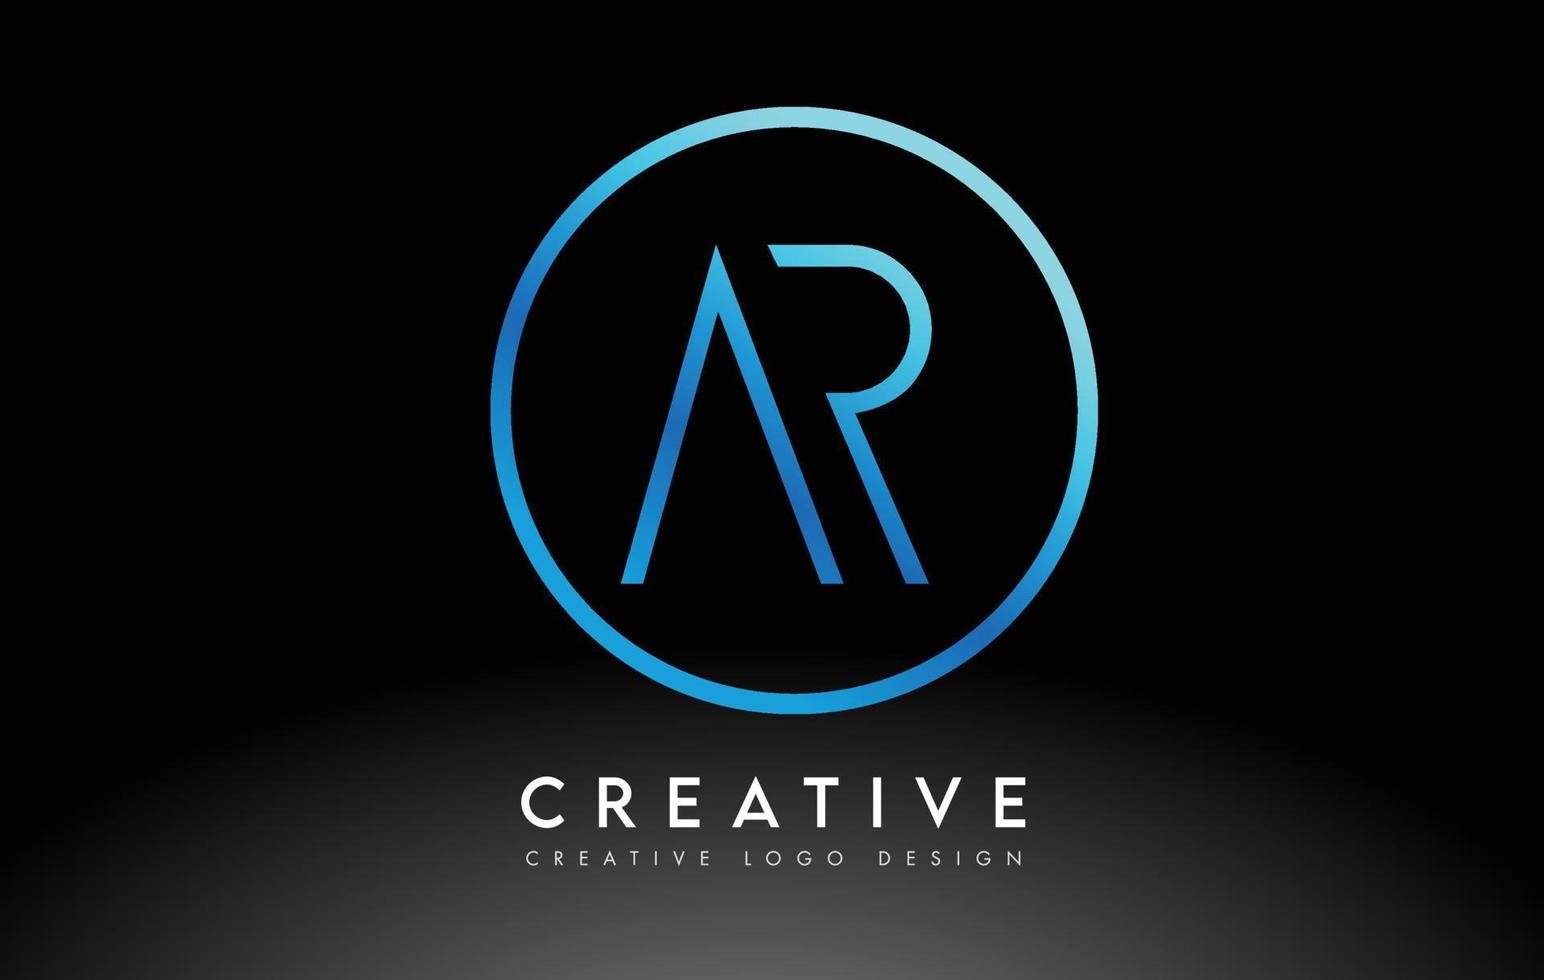 diseño de logotipo de letras ar azul neón delgado. concepto creativo simple carta limpia. vector